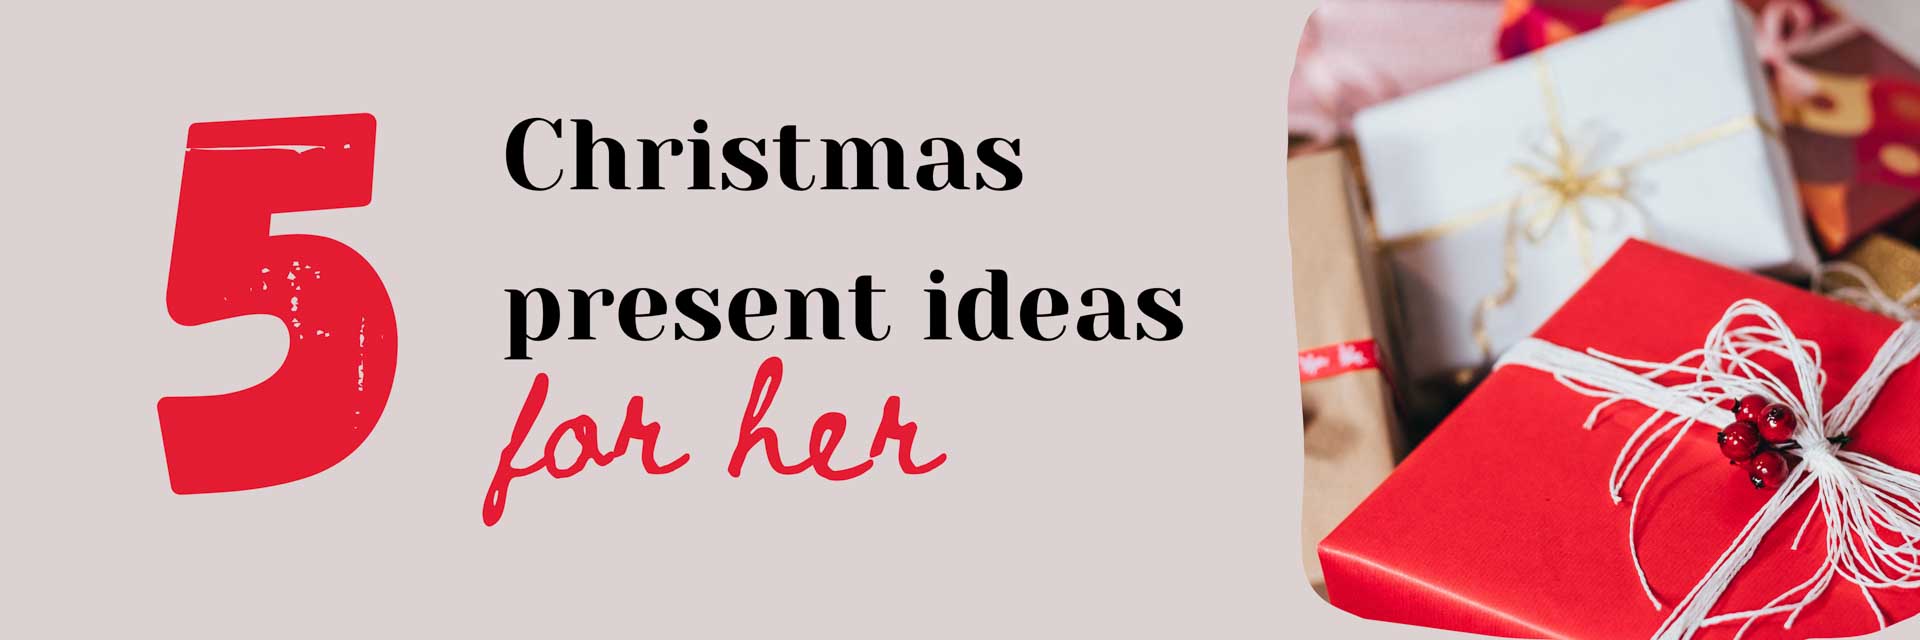 NAYAVITA christmas present ideas for her blog post